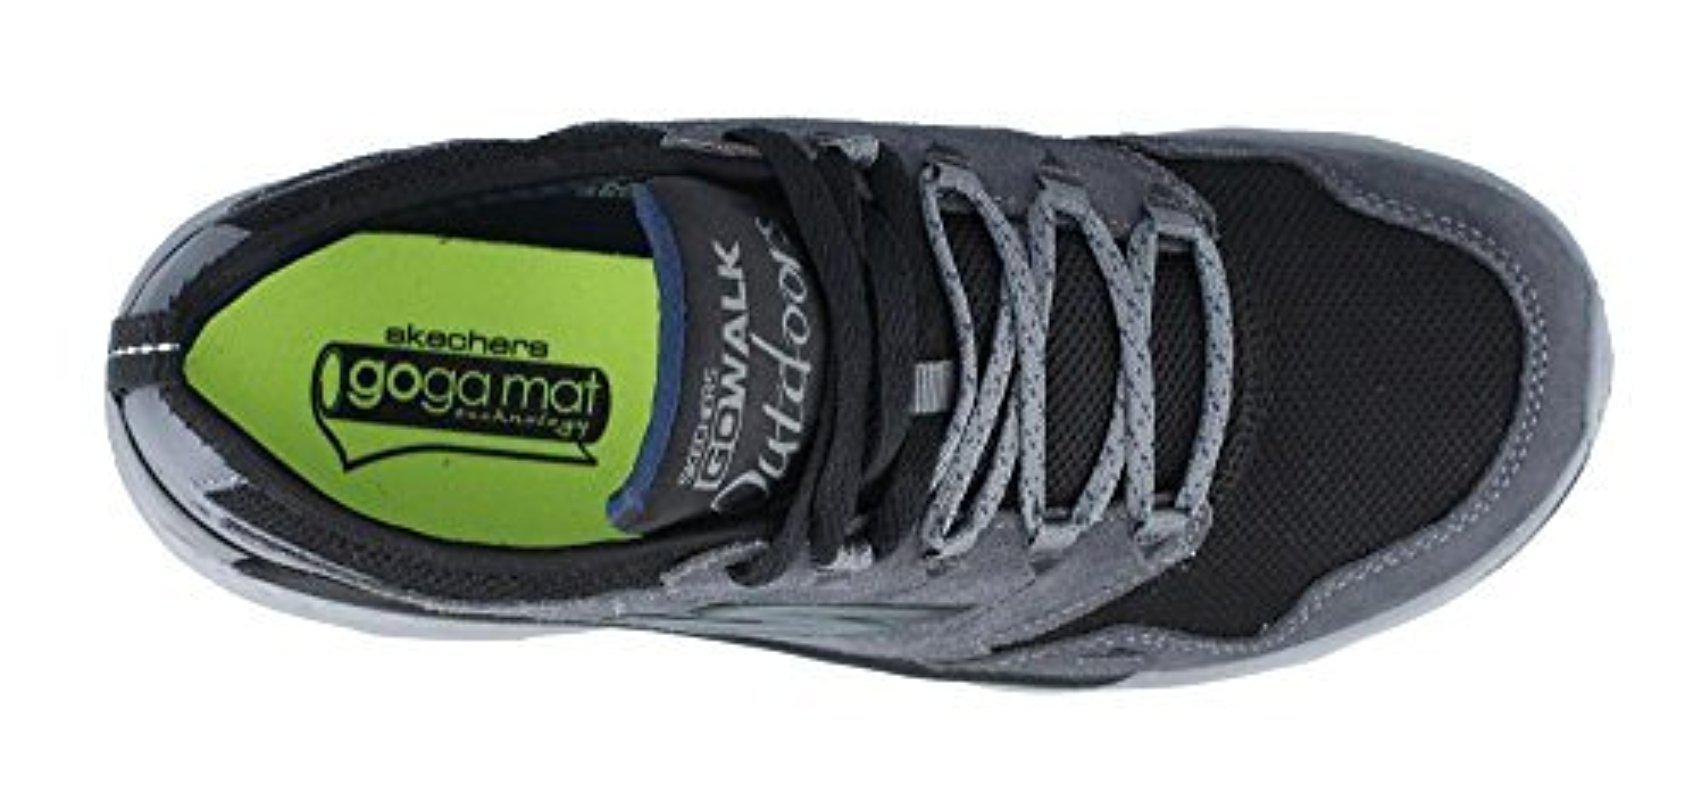 Skechers Suede Performance Go Outdoor-voyage Walking Shoe in Charcoal/Black  (Black) for Men - Lyst